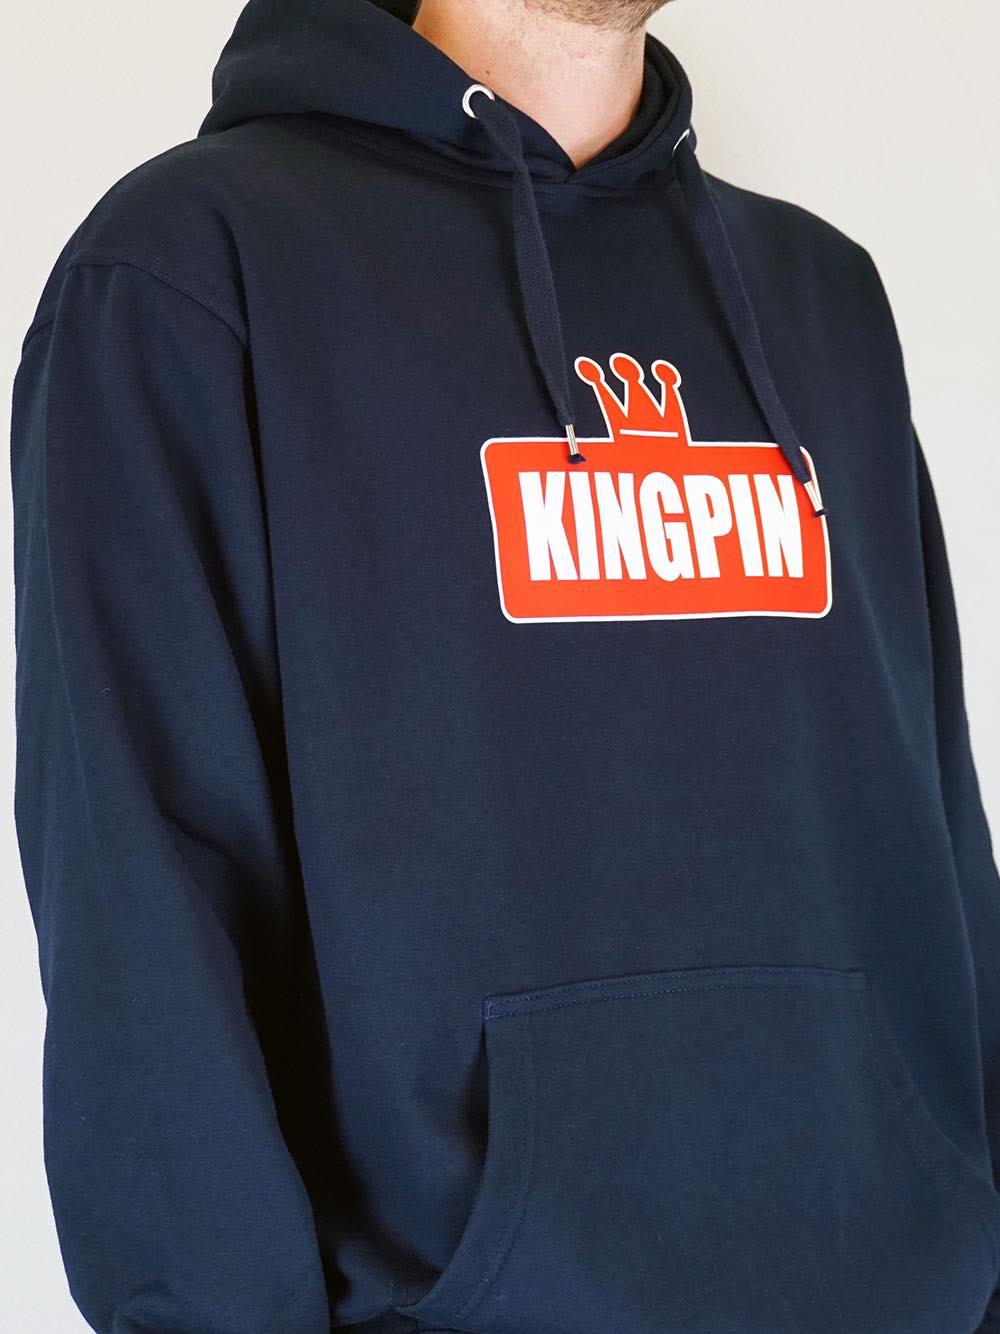 Kingpin Hoodie - Navy Blue